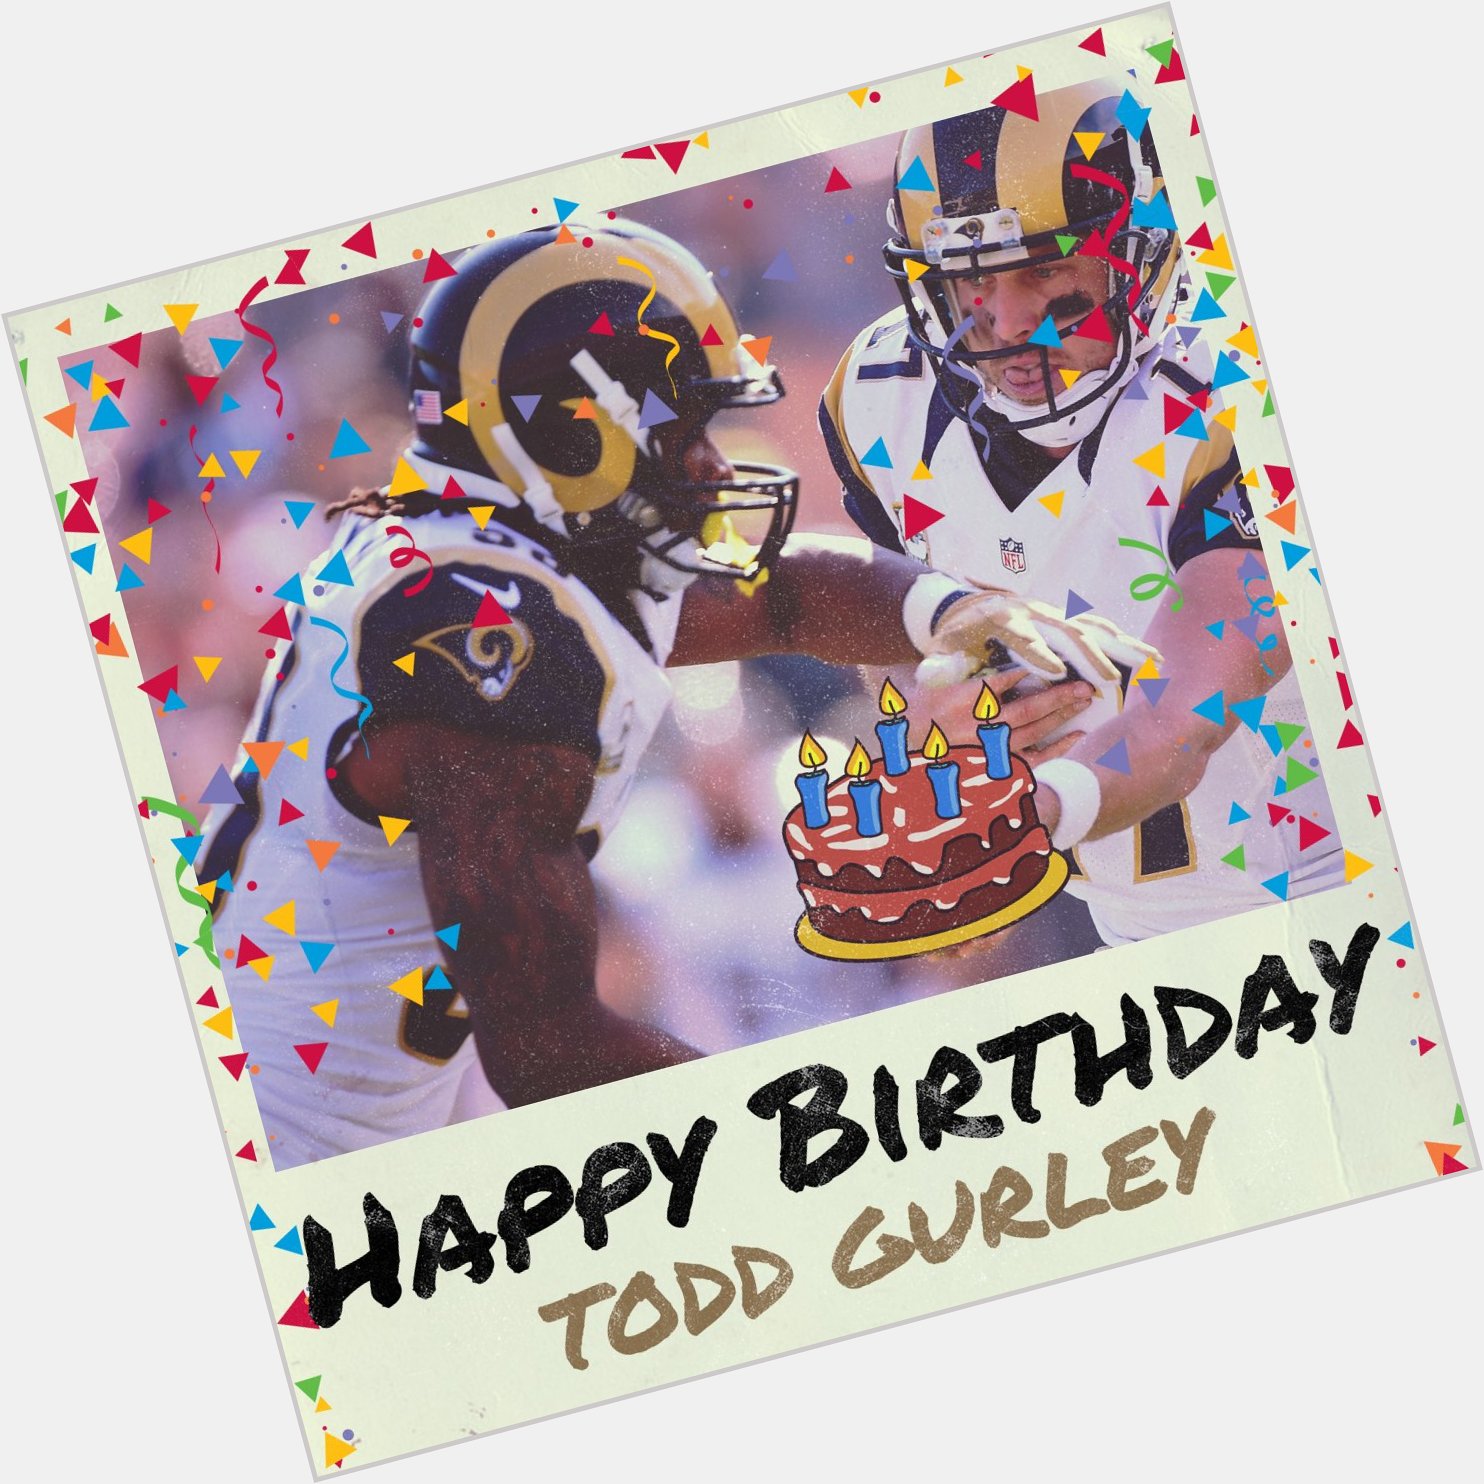 Happy 23rd Birthday, Todd Gurley! 